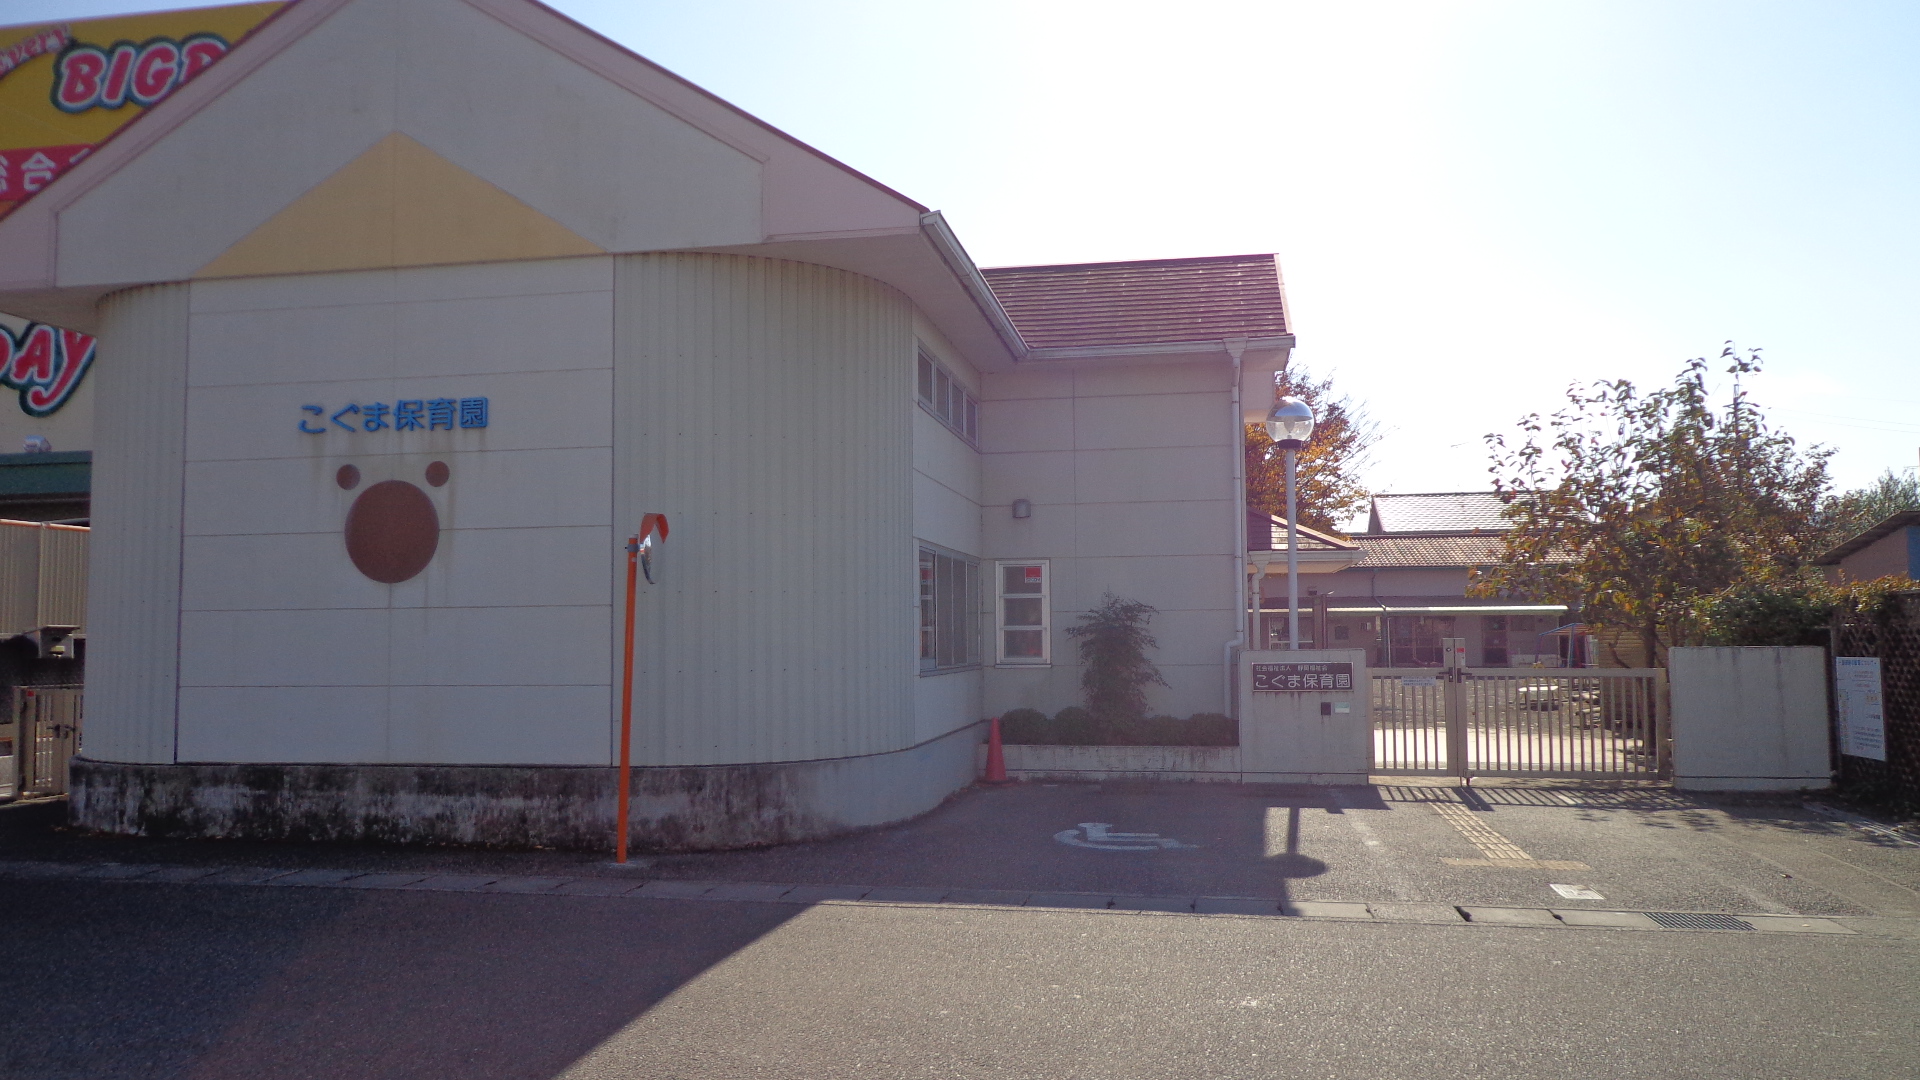 kindergarten ・ Nursery. Bear cub nursery school (kindergarten ・ Nursery school) to 200m